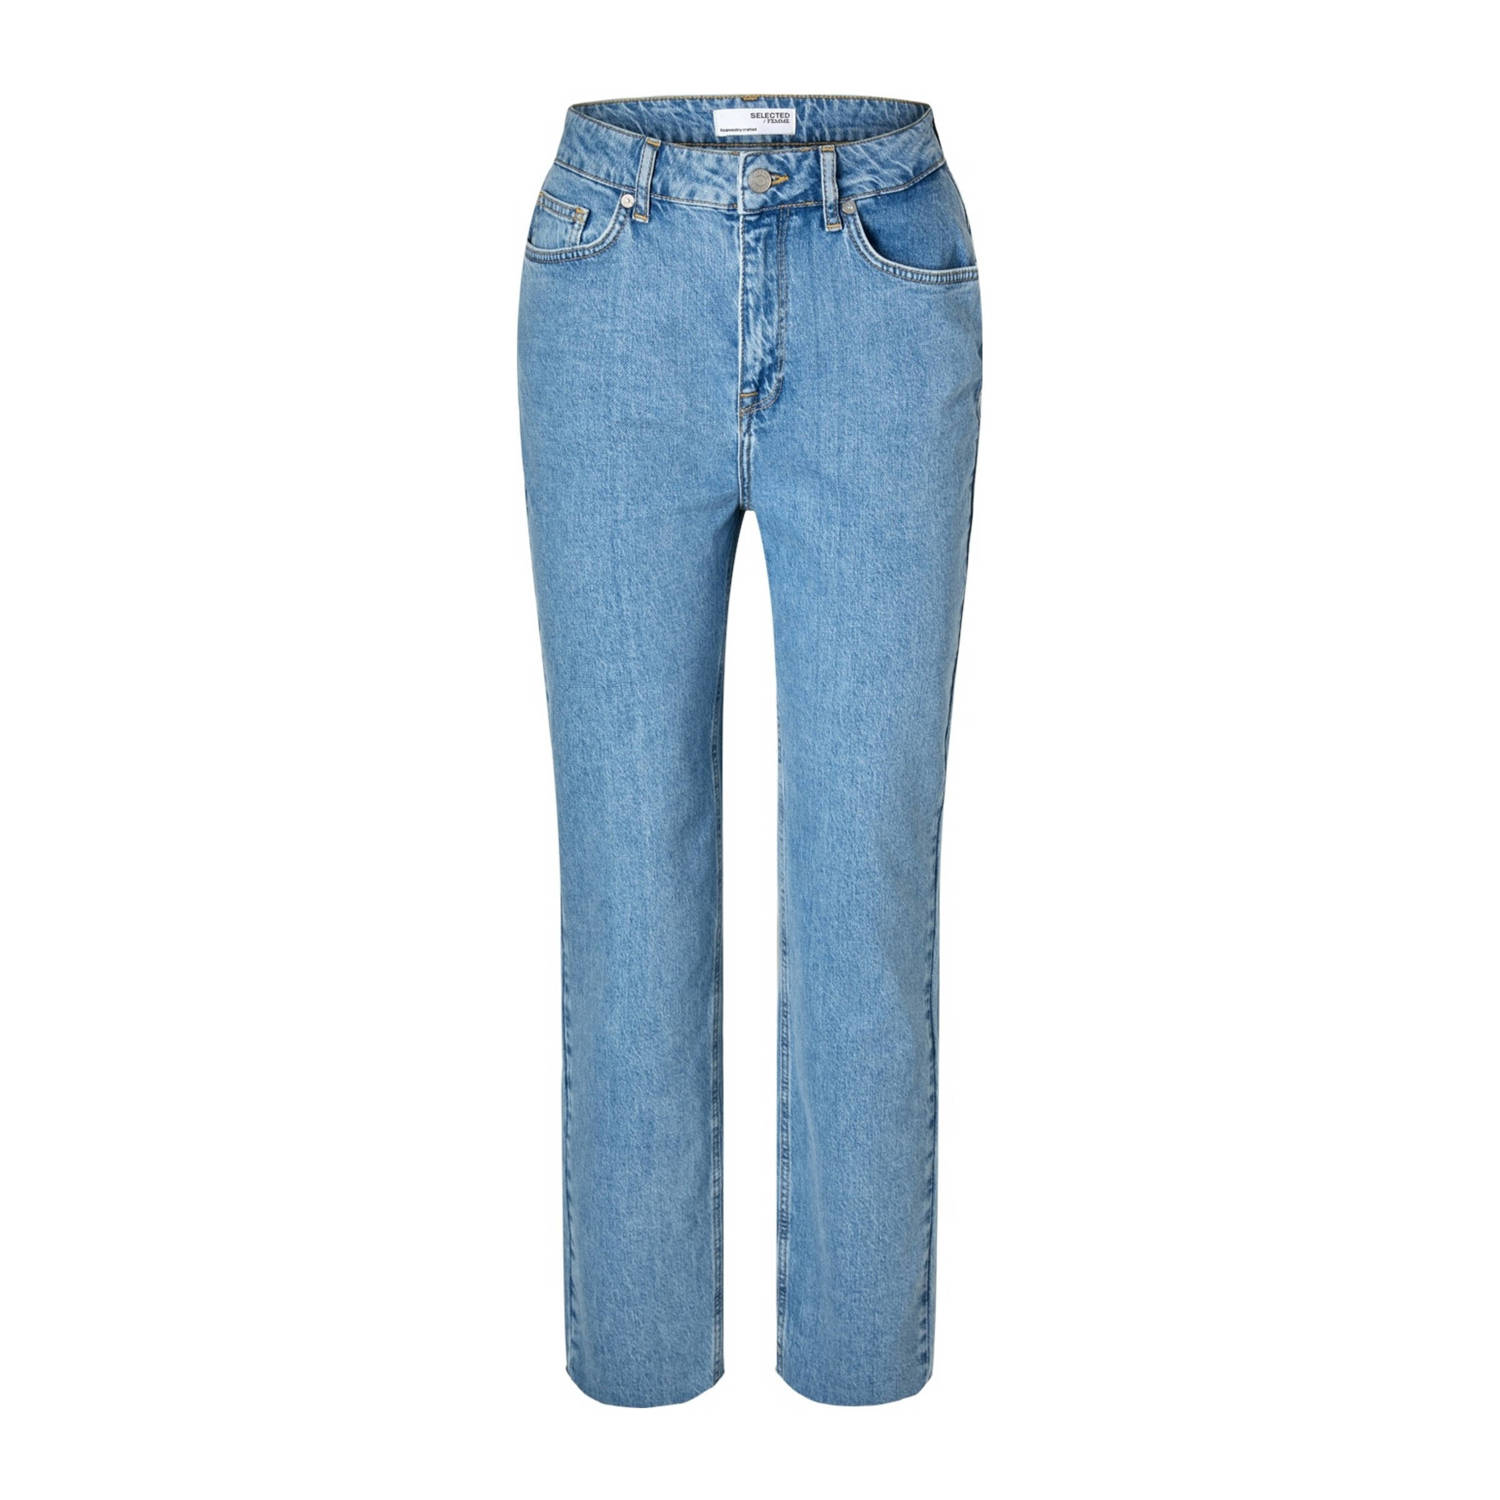 SELECTED FEMME high waist straight jeans light blue denim